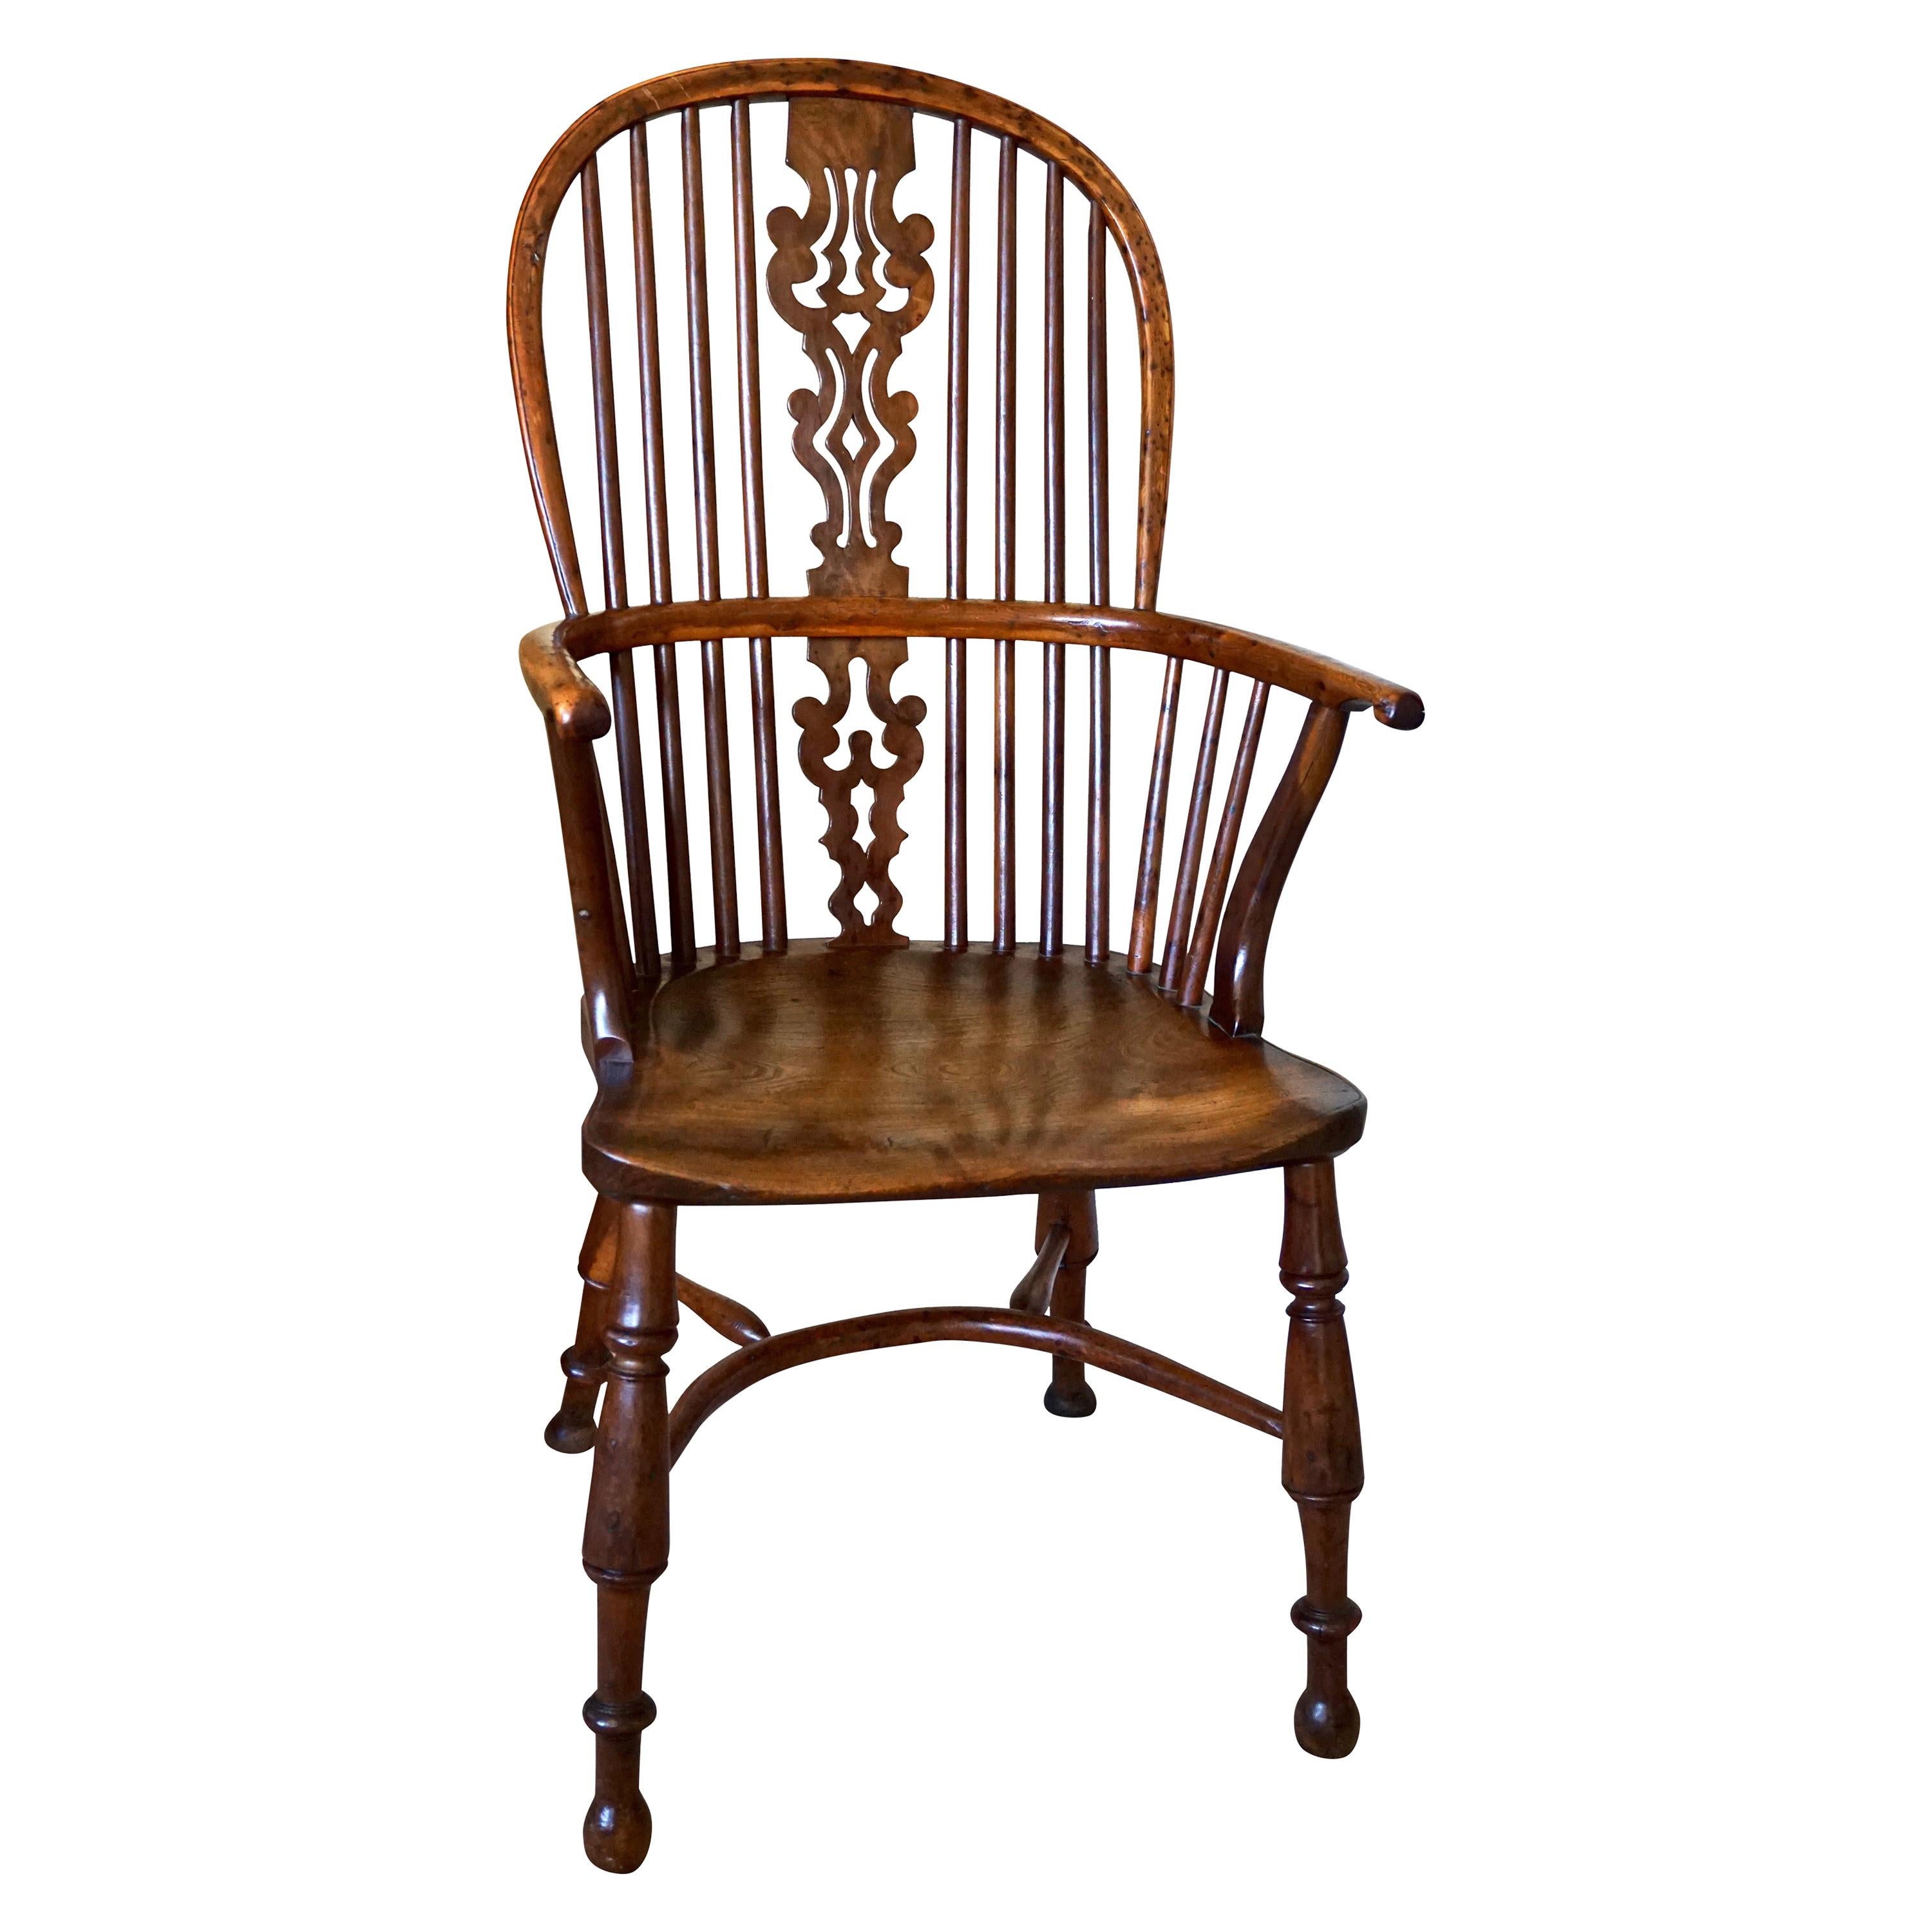 English Yew Wood Narrow Arm High Back Windsor Chair